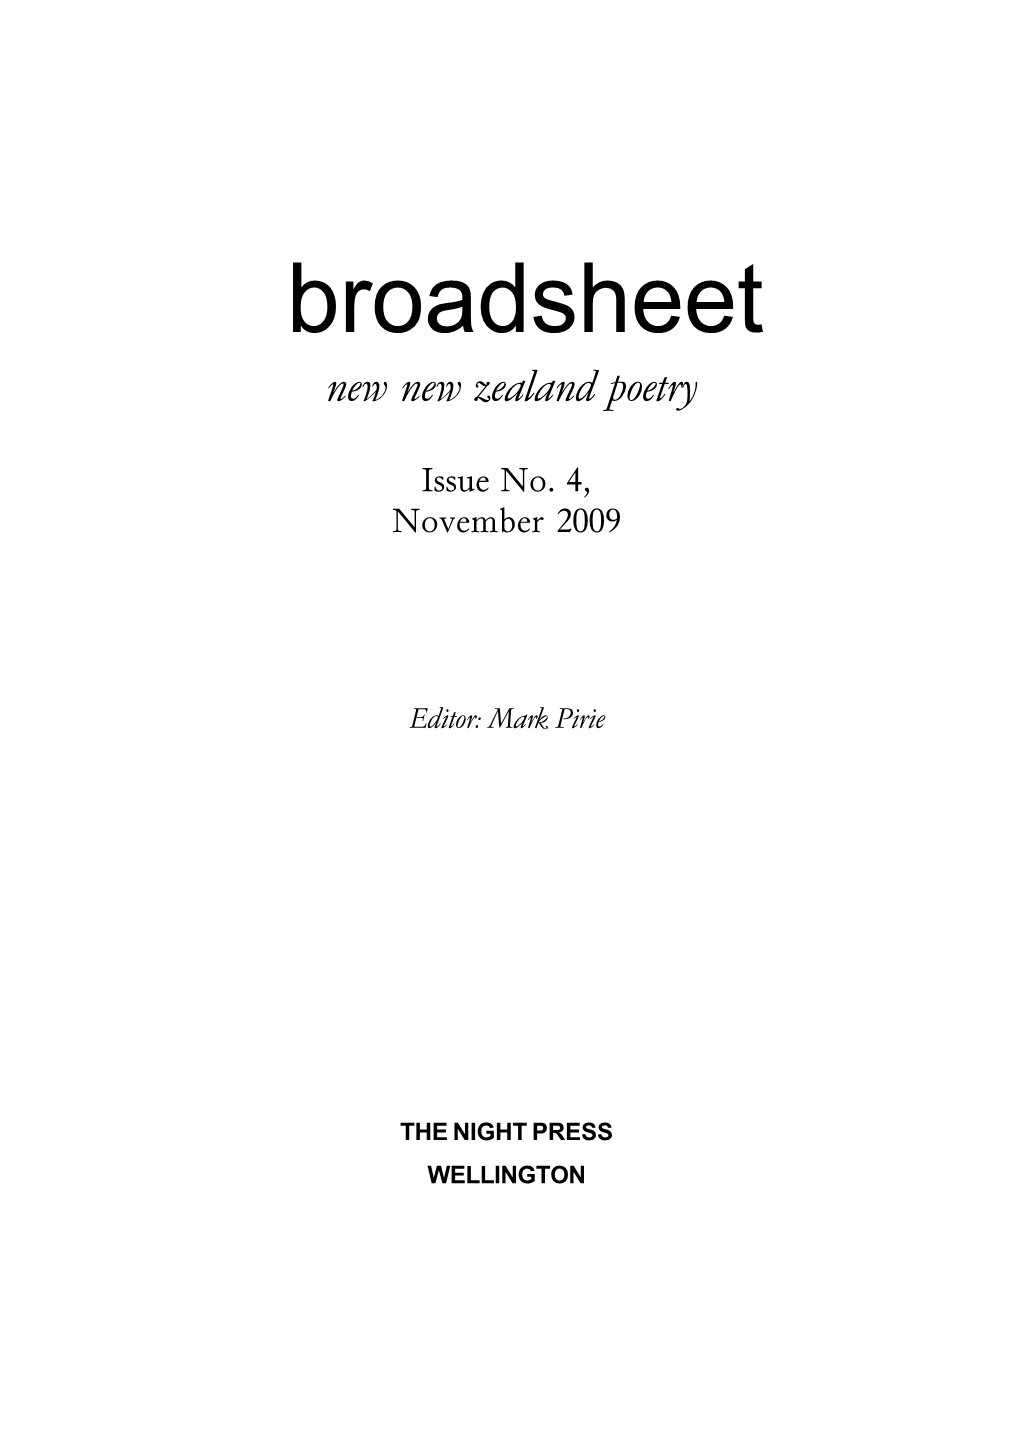 Issue 4 November 2009